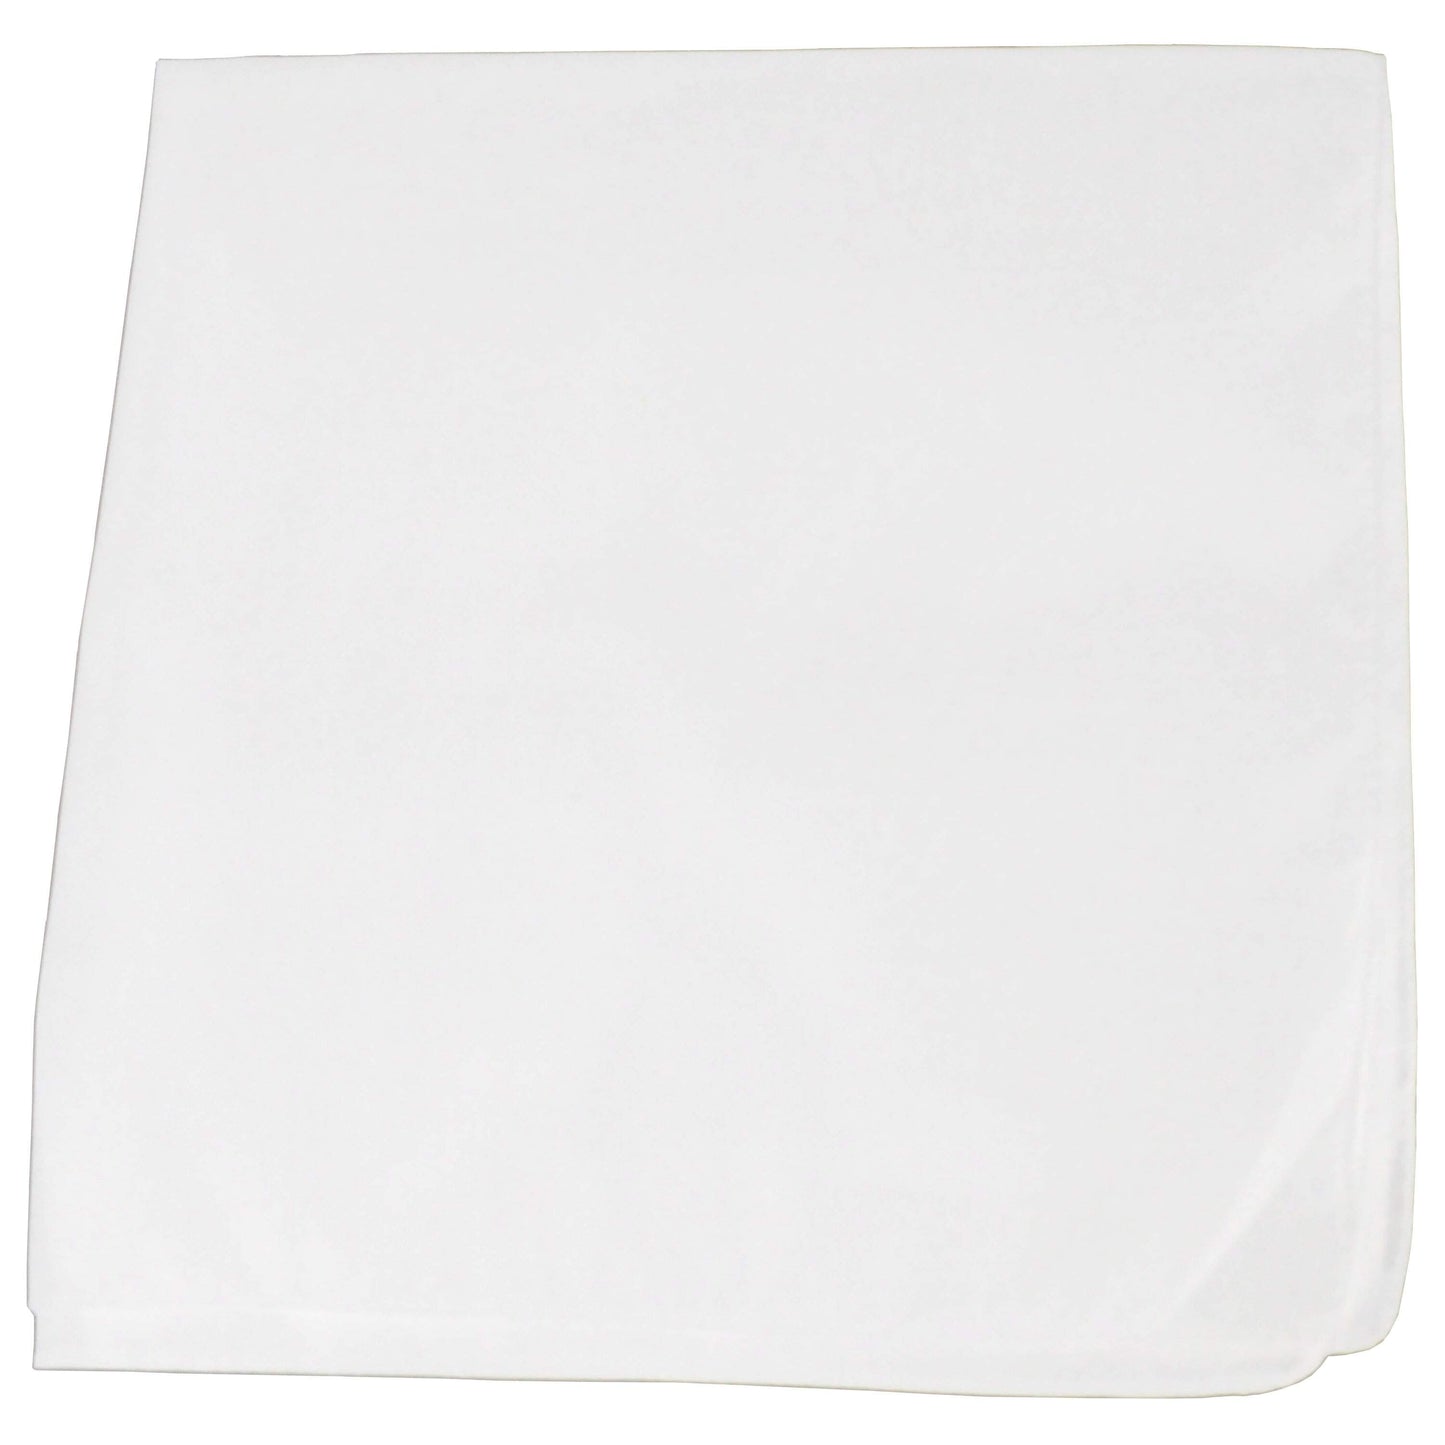 Daily Basic Bulk Lot Polyester XL Multi-Purpose Bandana - Paisley and Solid - Pack of 200 (Mix)